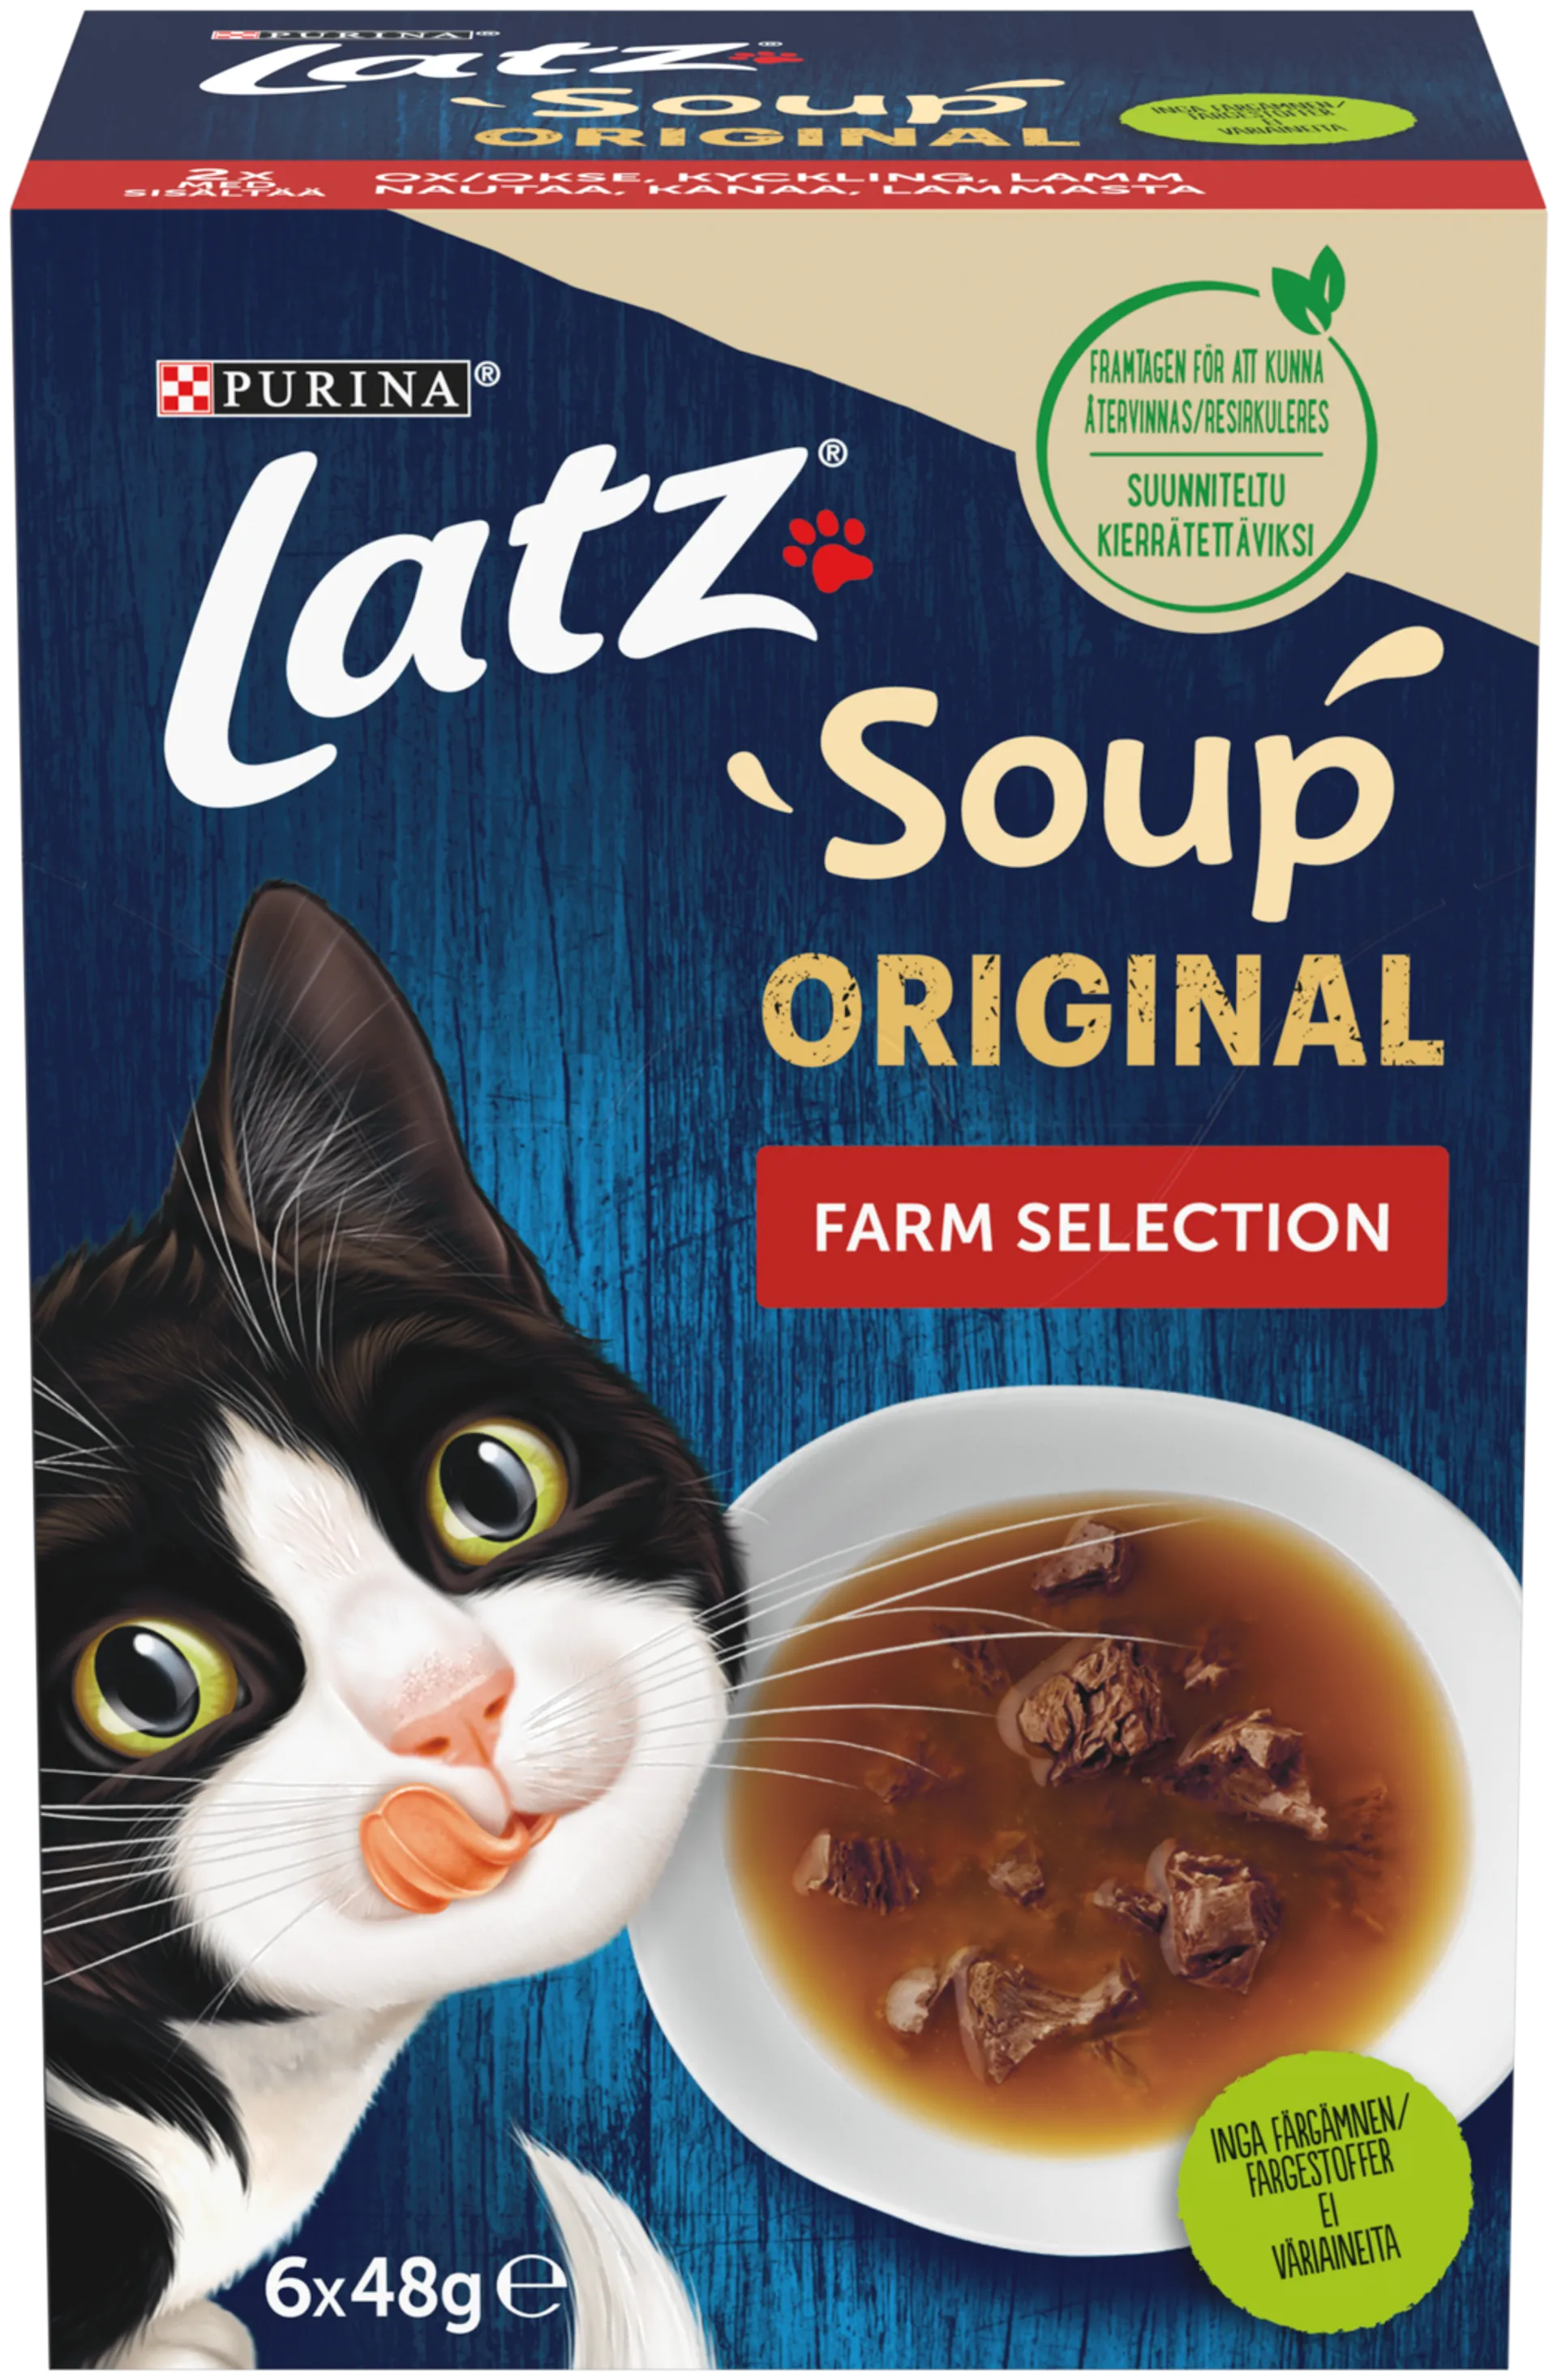 LATZ 6x48g Soup Farm Selection kissanruoka